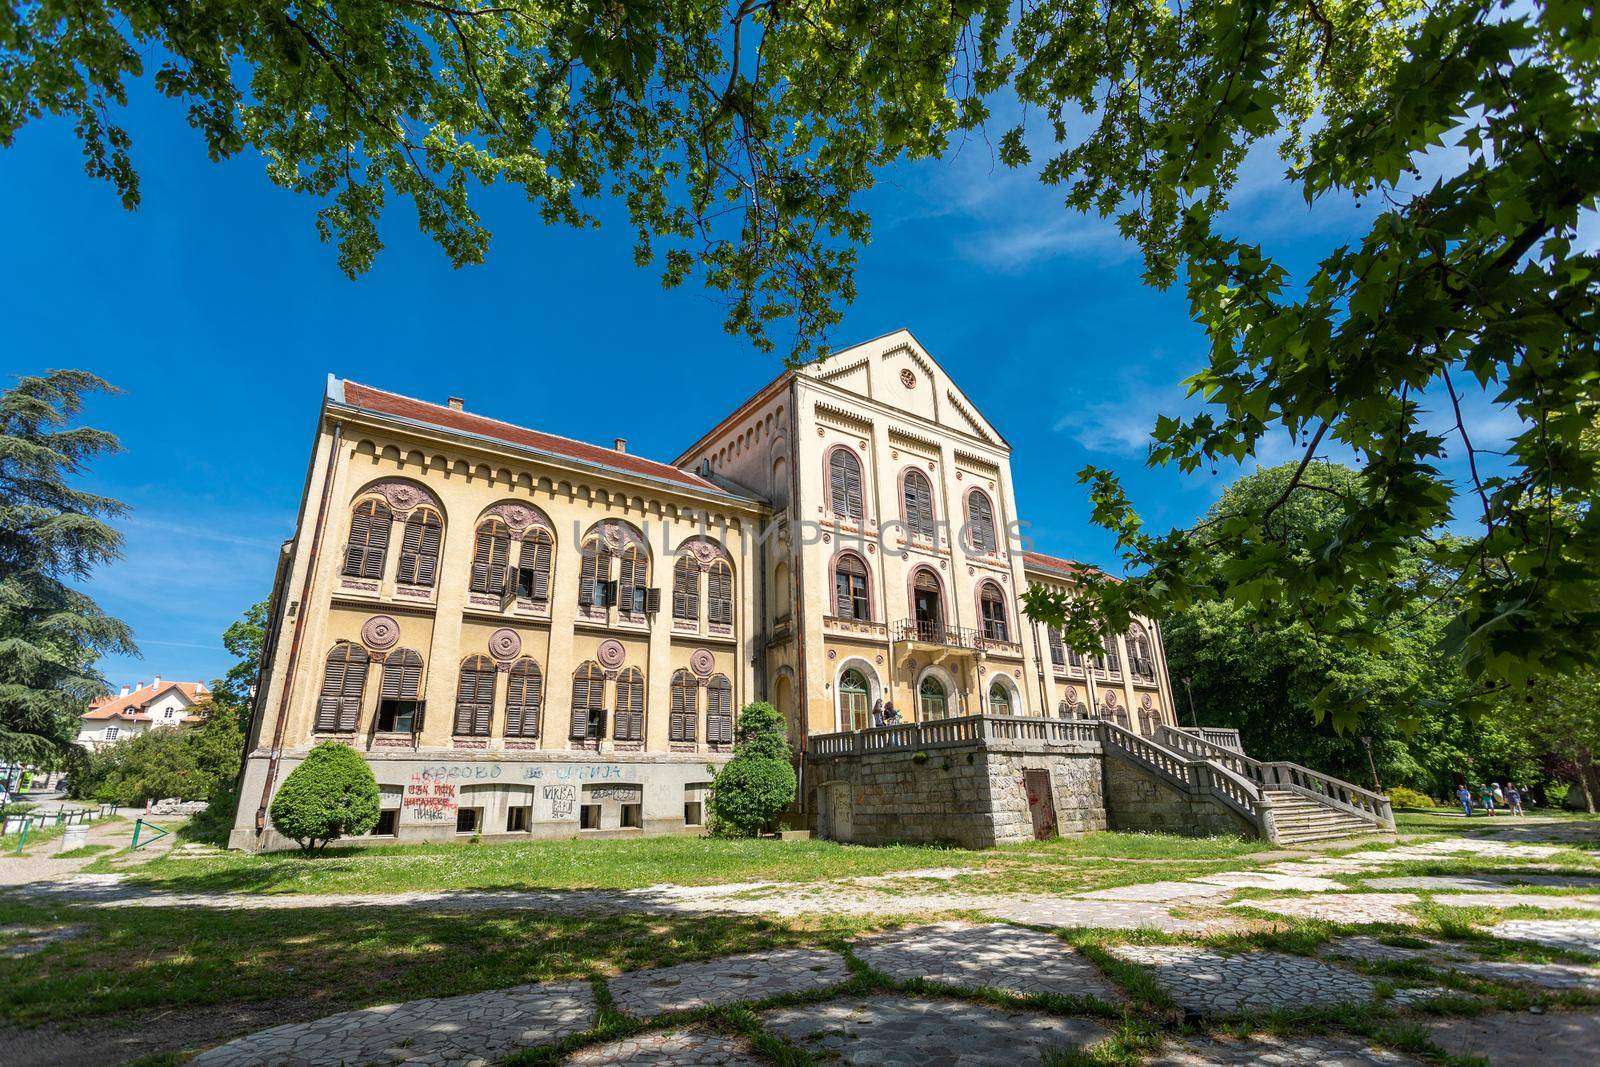 Staro Zdanje in Arandjelovac, Bukovicka banja spa, Serbia